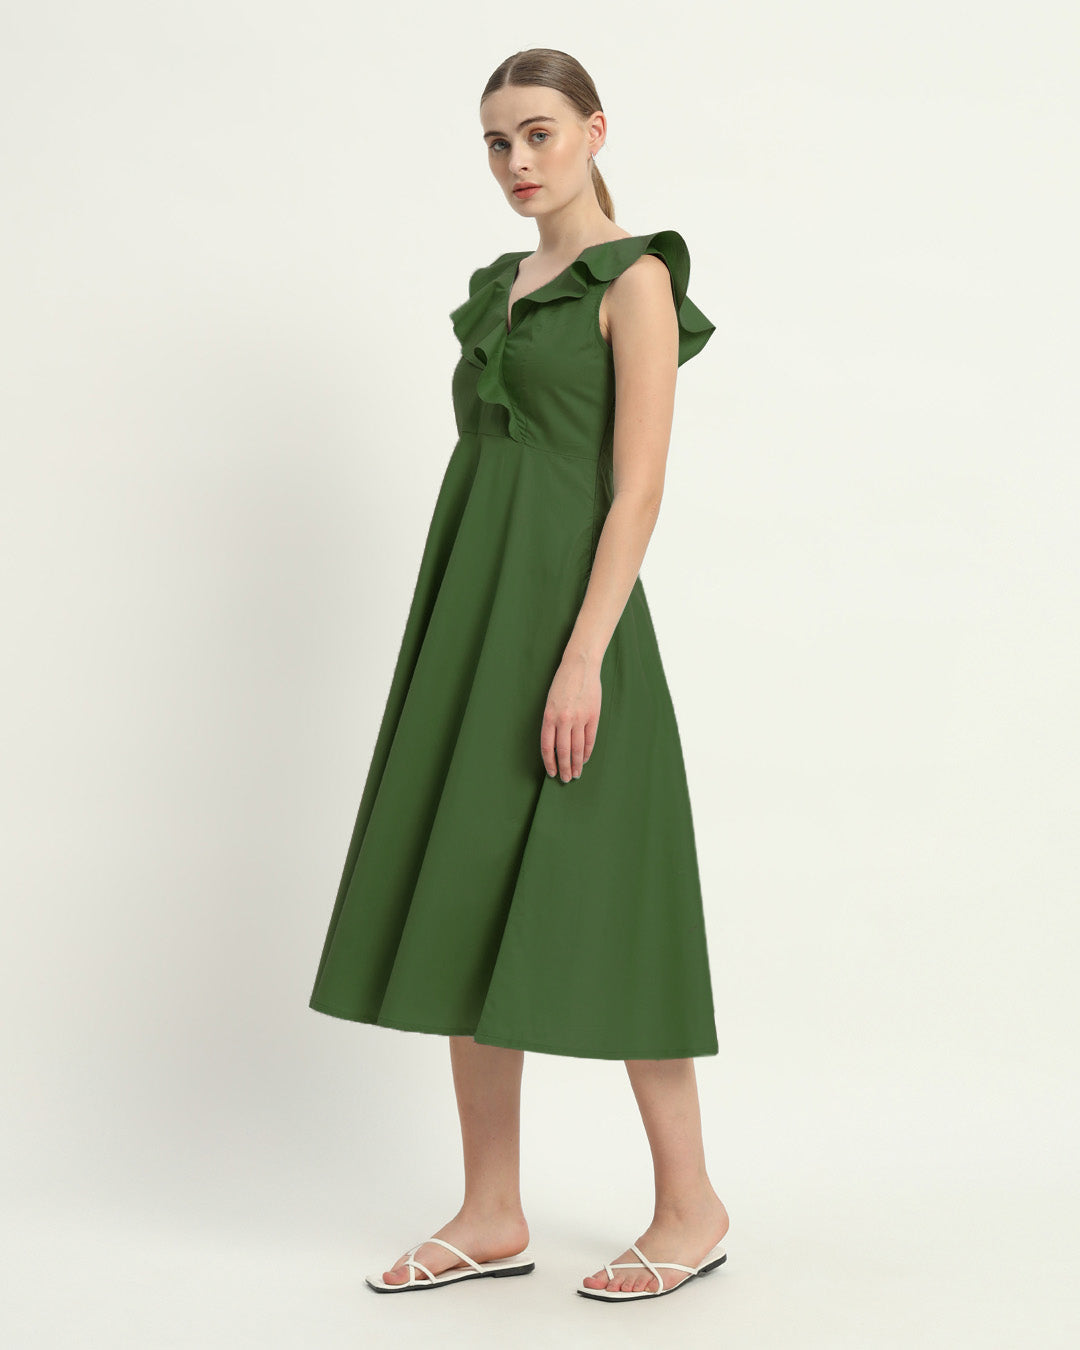 The Albany Emerald Cotton Dress